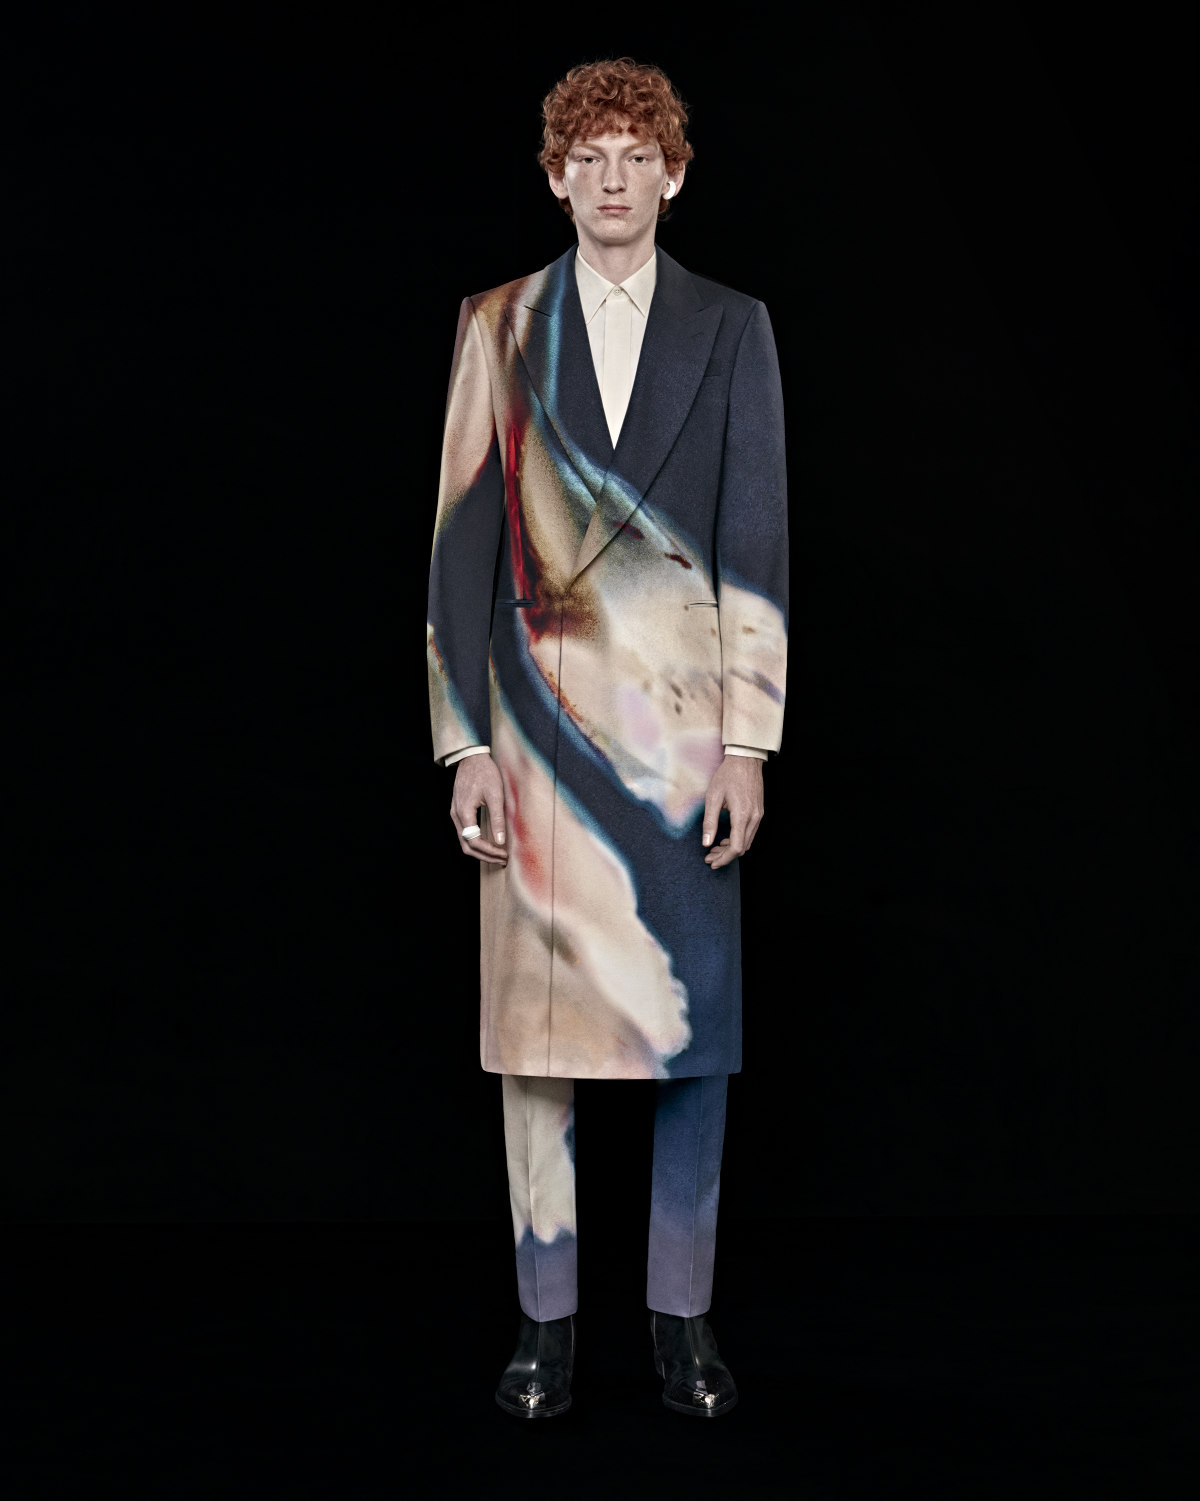 Alexander McQueen Presents Its New Pre-Autumn/Winter 2023 Menswear Collection